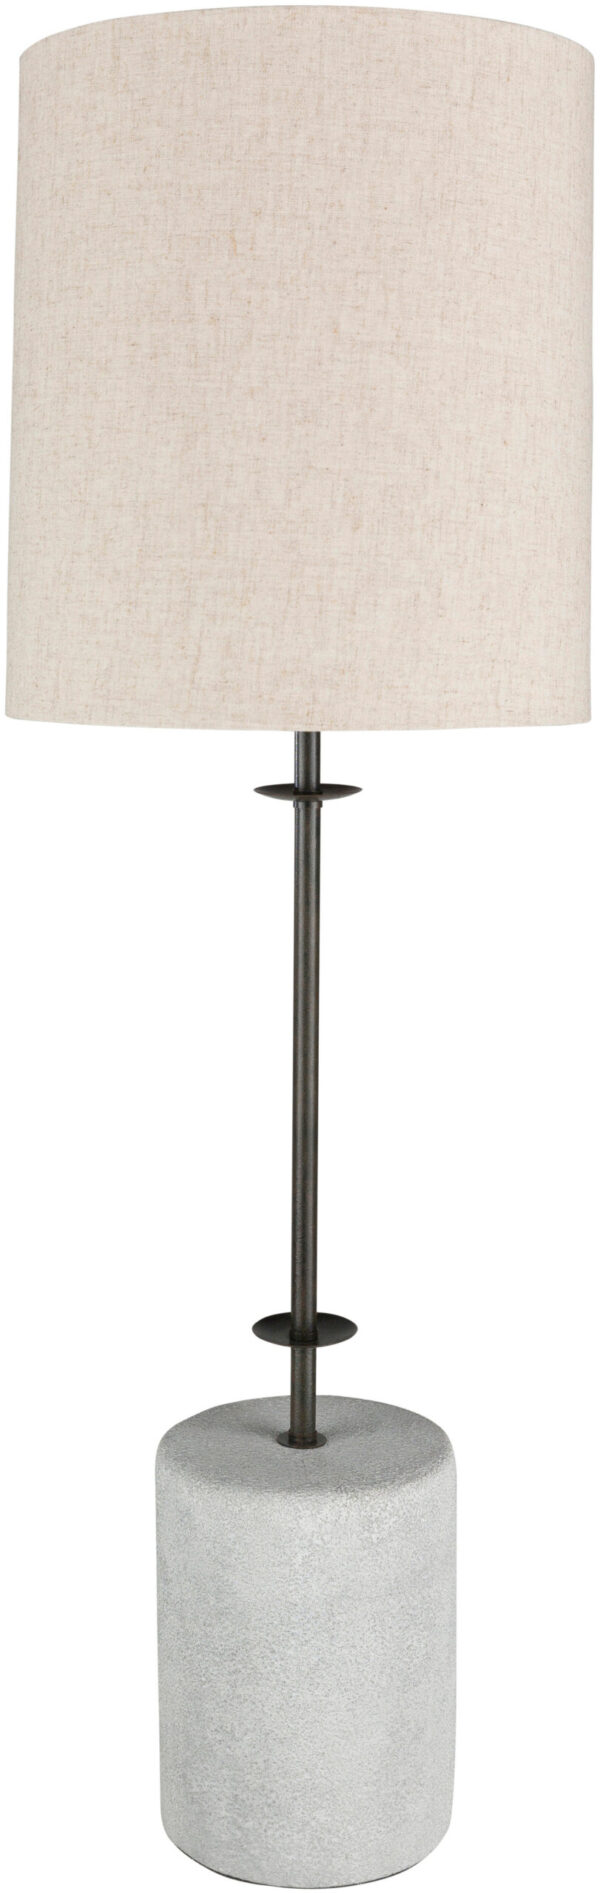 Surya - Rigby Table Lamp RGB-002